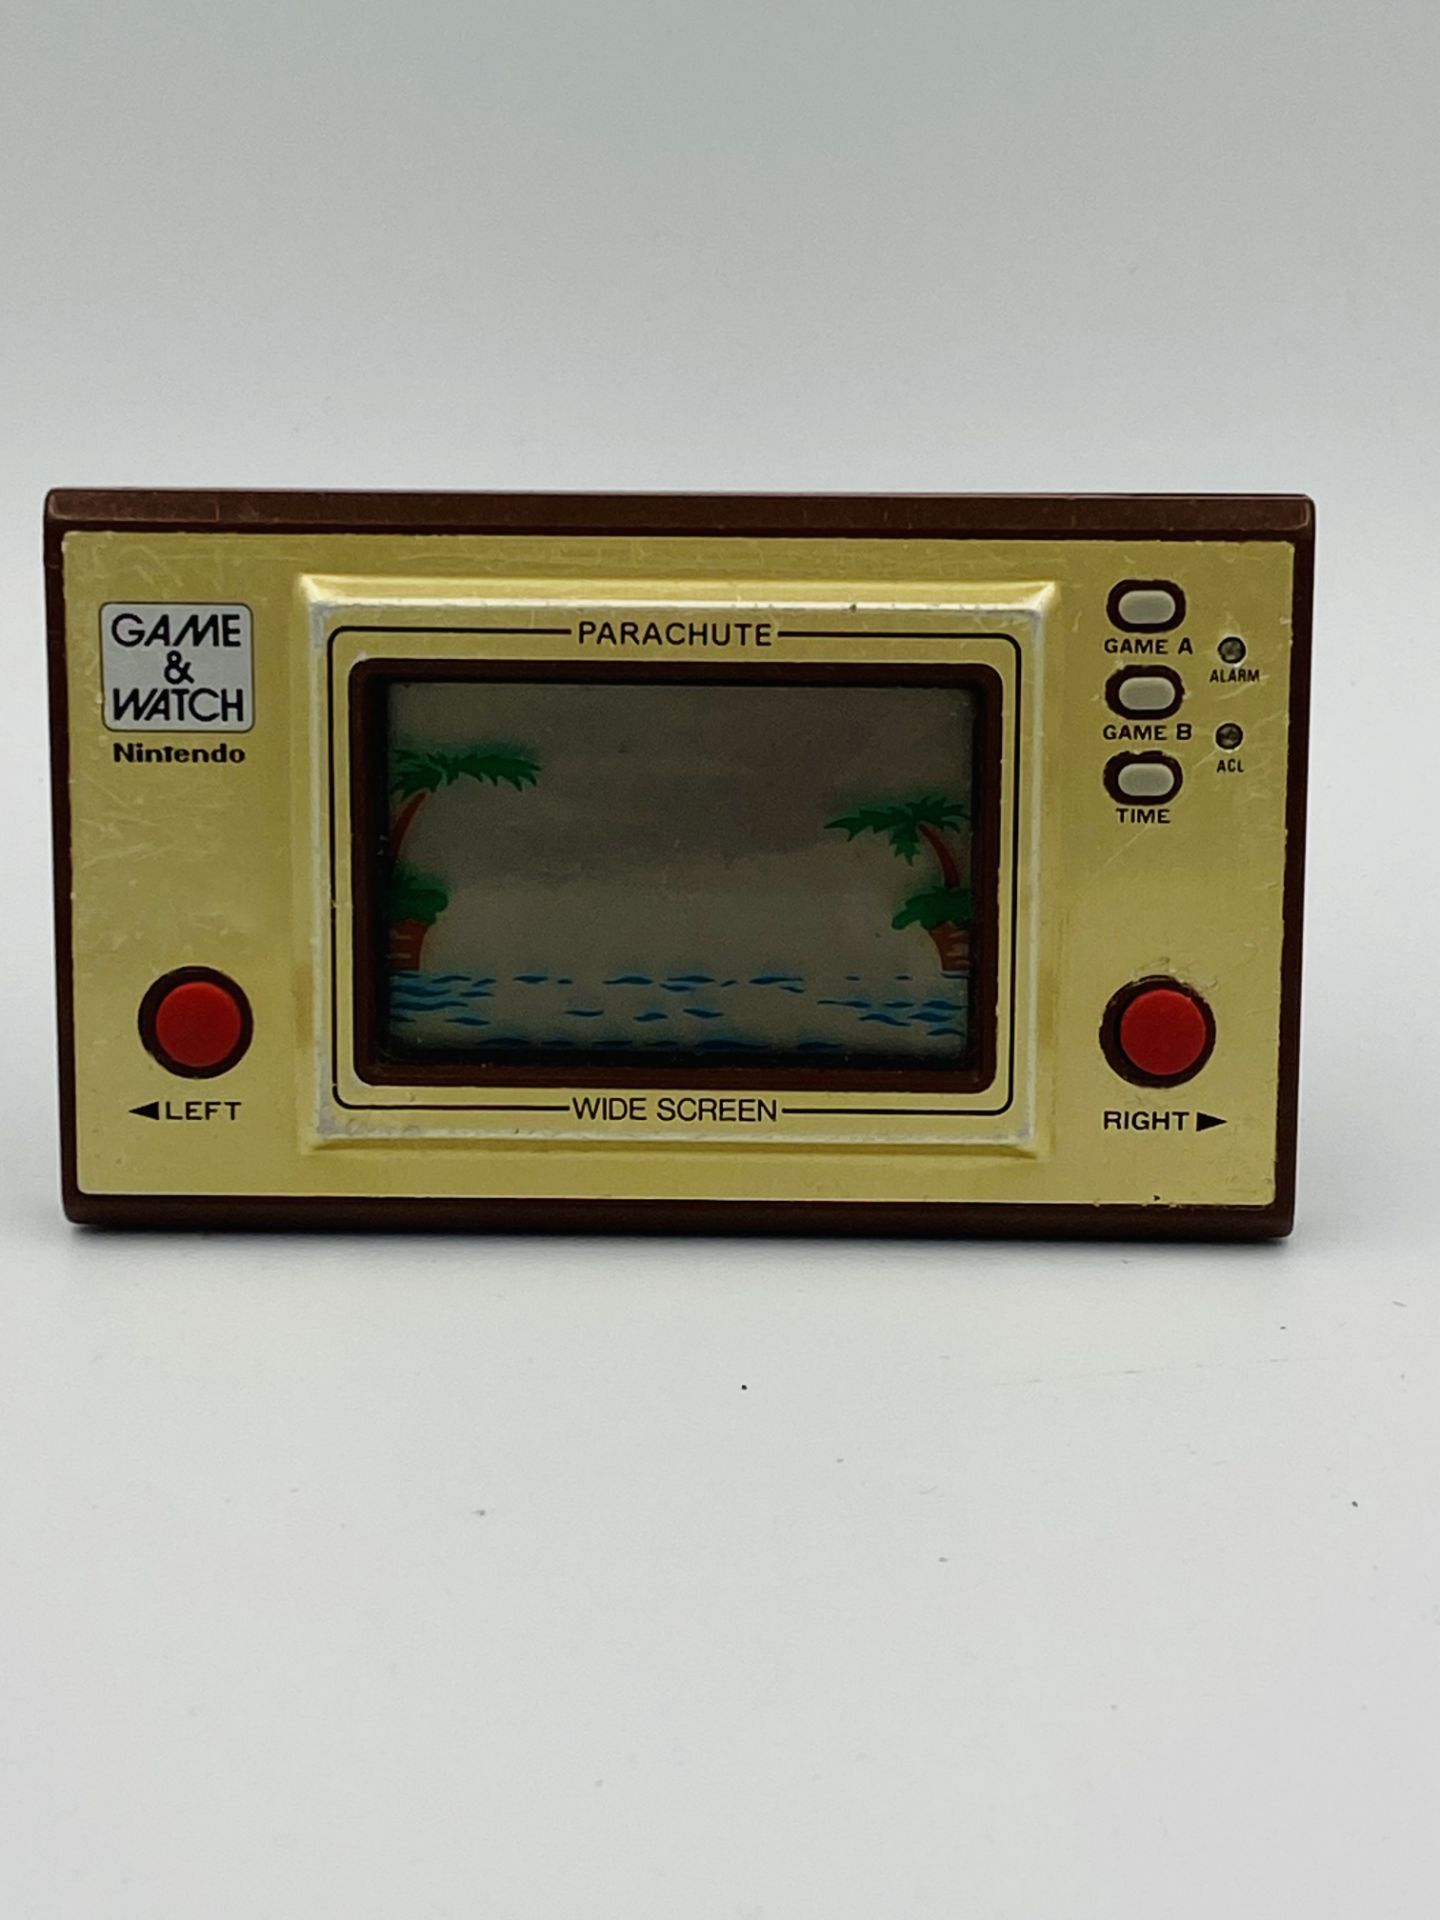 Nintendo Game & Watch Parachute, model PR-21